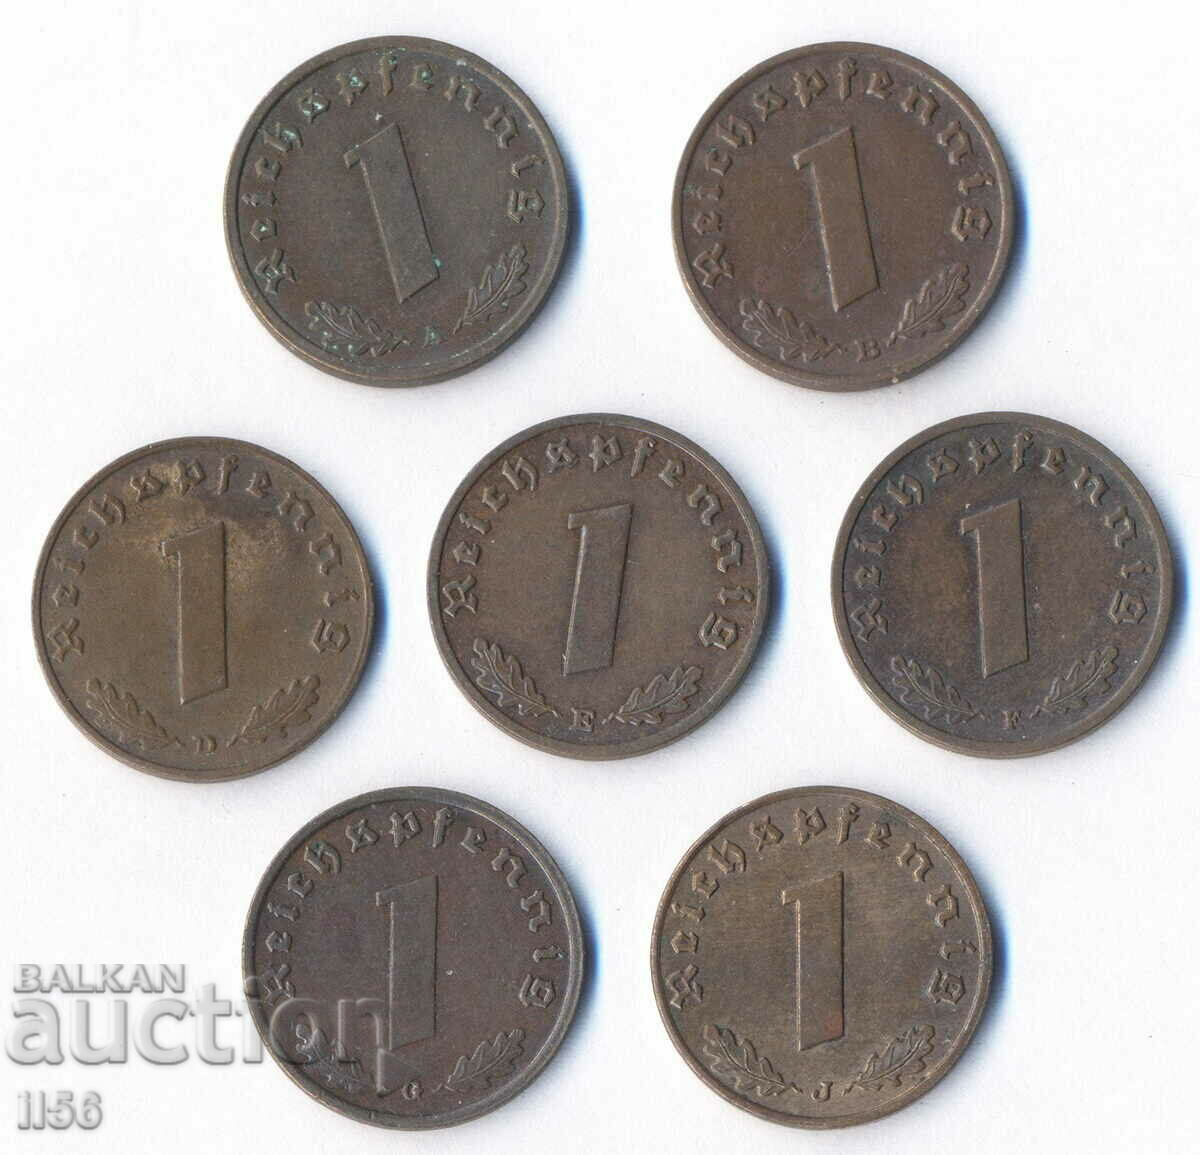 Germany - 1 pfenning 1939 - all mints